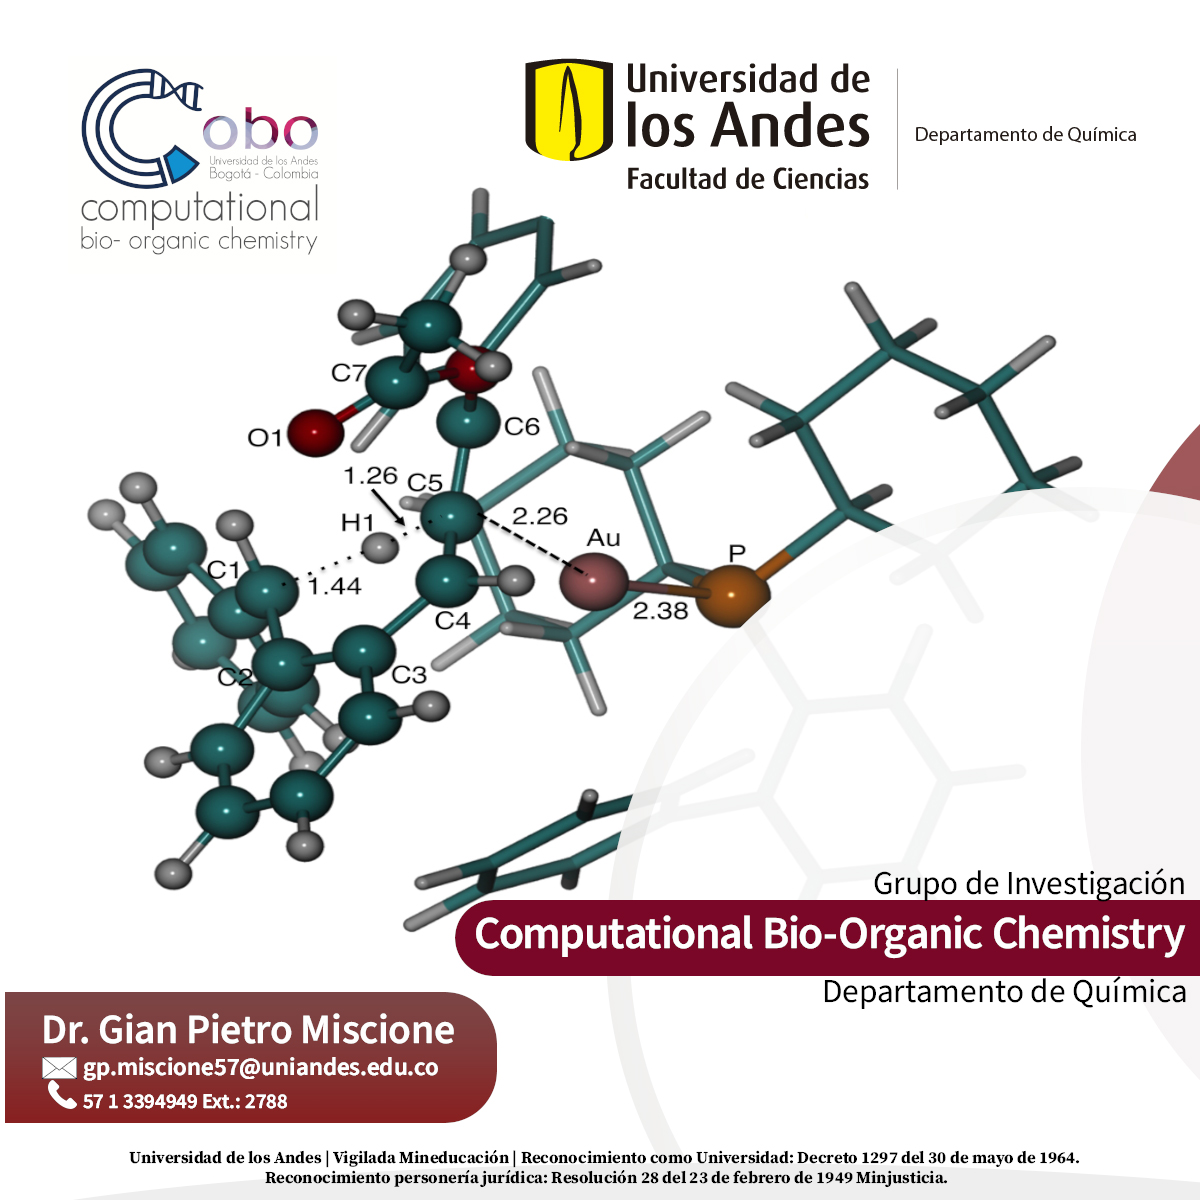 Computational Bio-Organic Chemistry